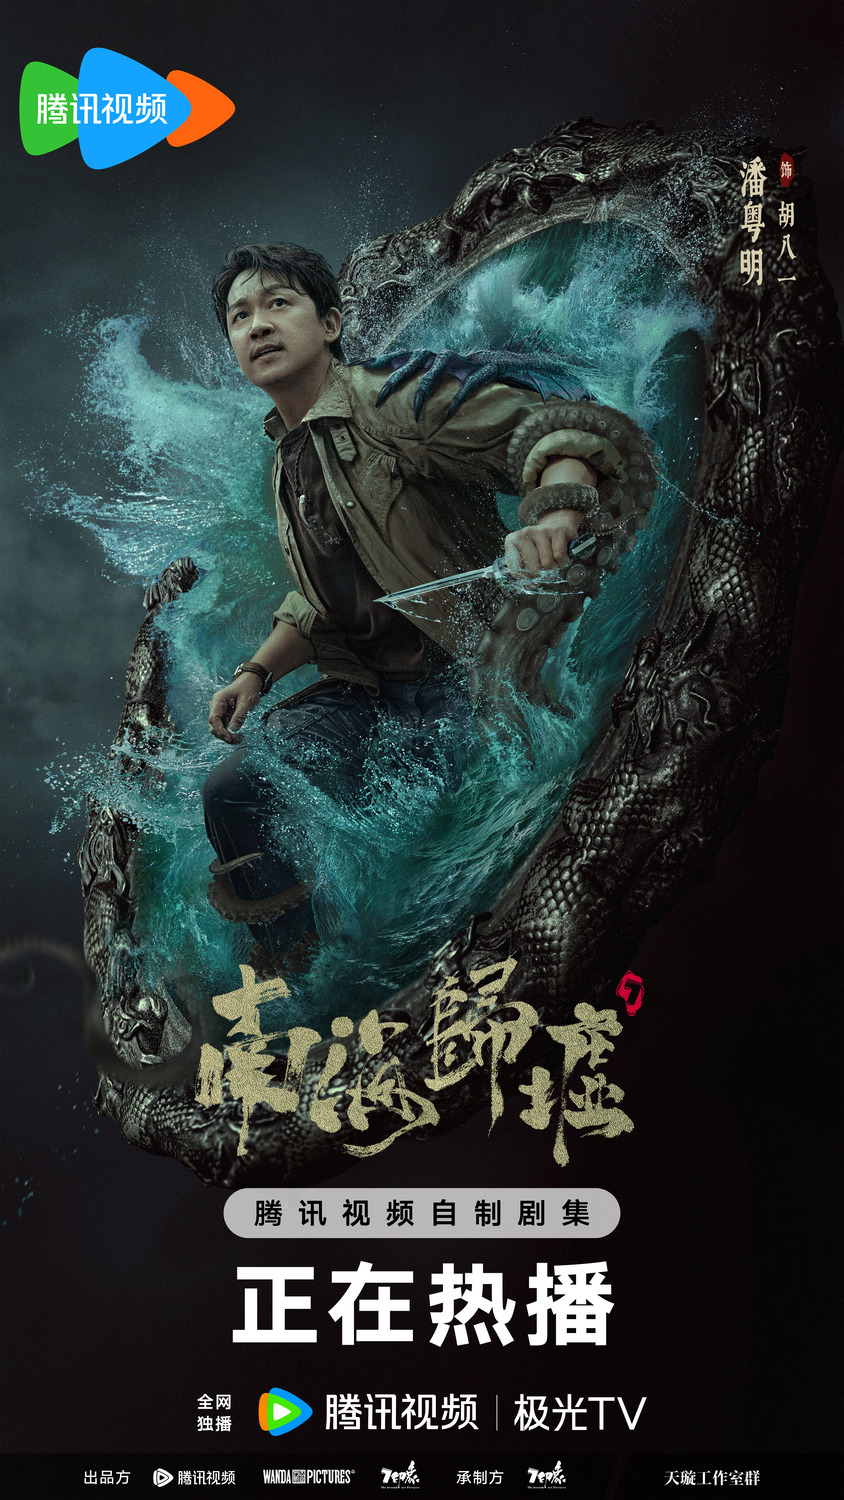 Extra Large TV Poster Image for Nan hai gui xu (#2 of 6)